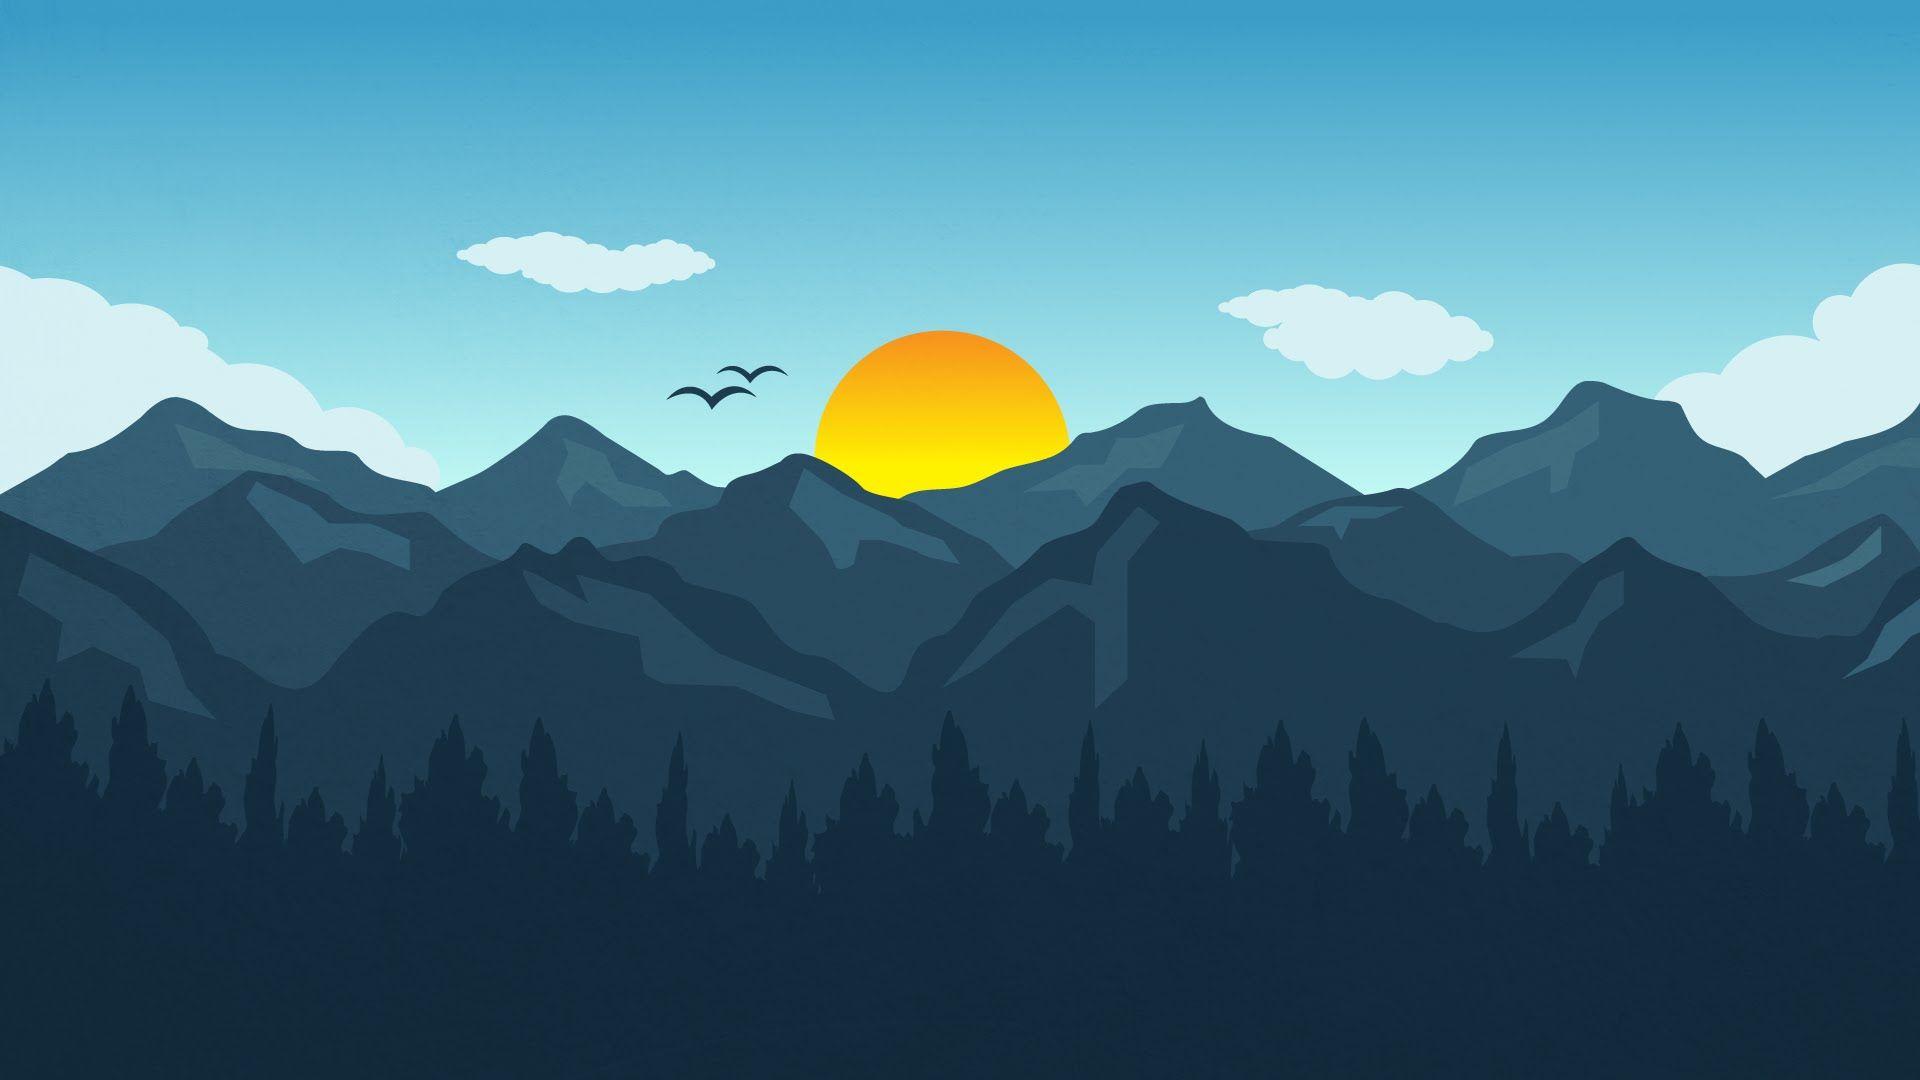 background for illustrator free download